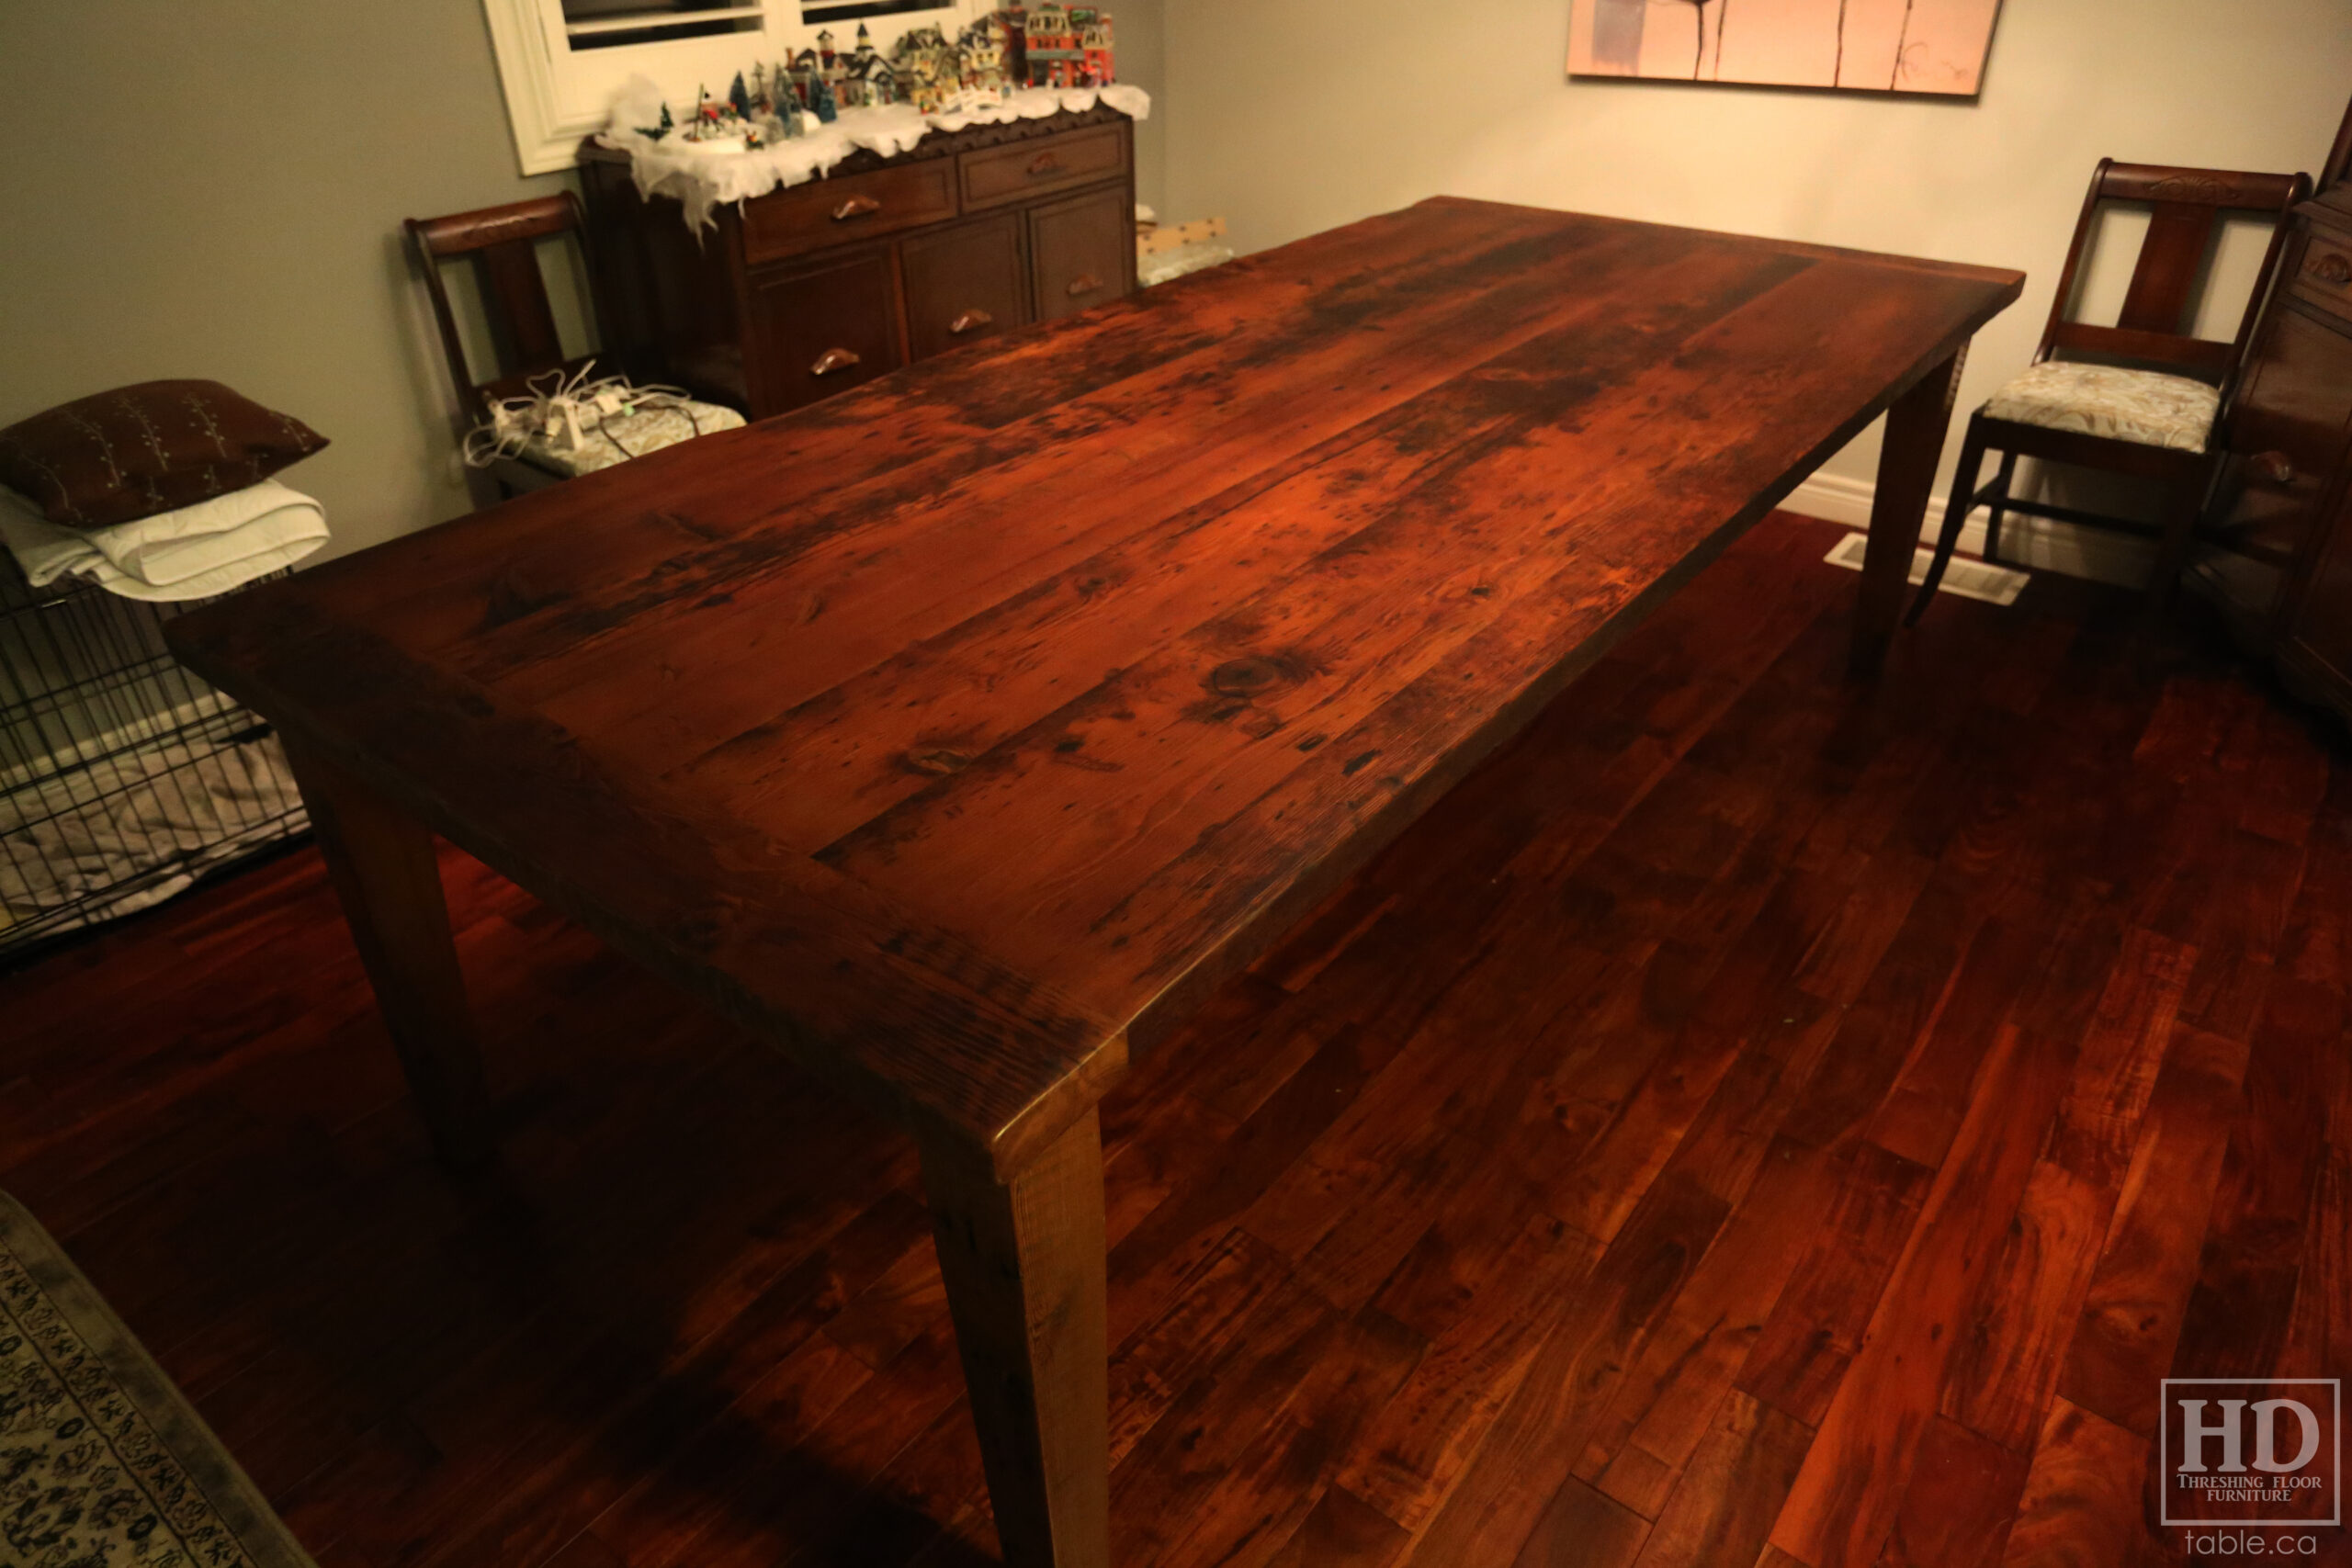 Custom Harvest Table made from Ontario Barnwood by HD Threshing Floor Furniture / www.table.ca